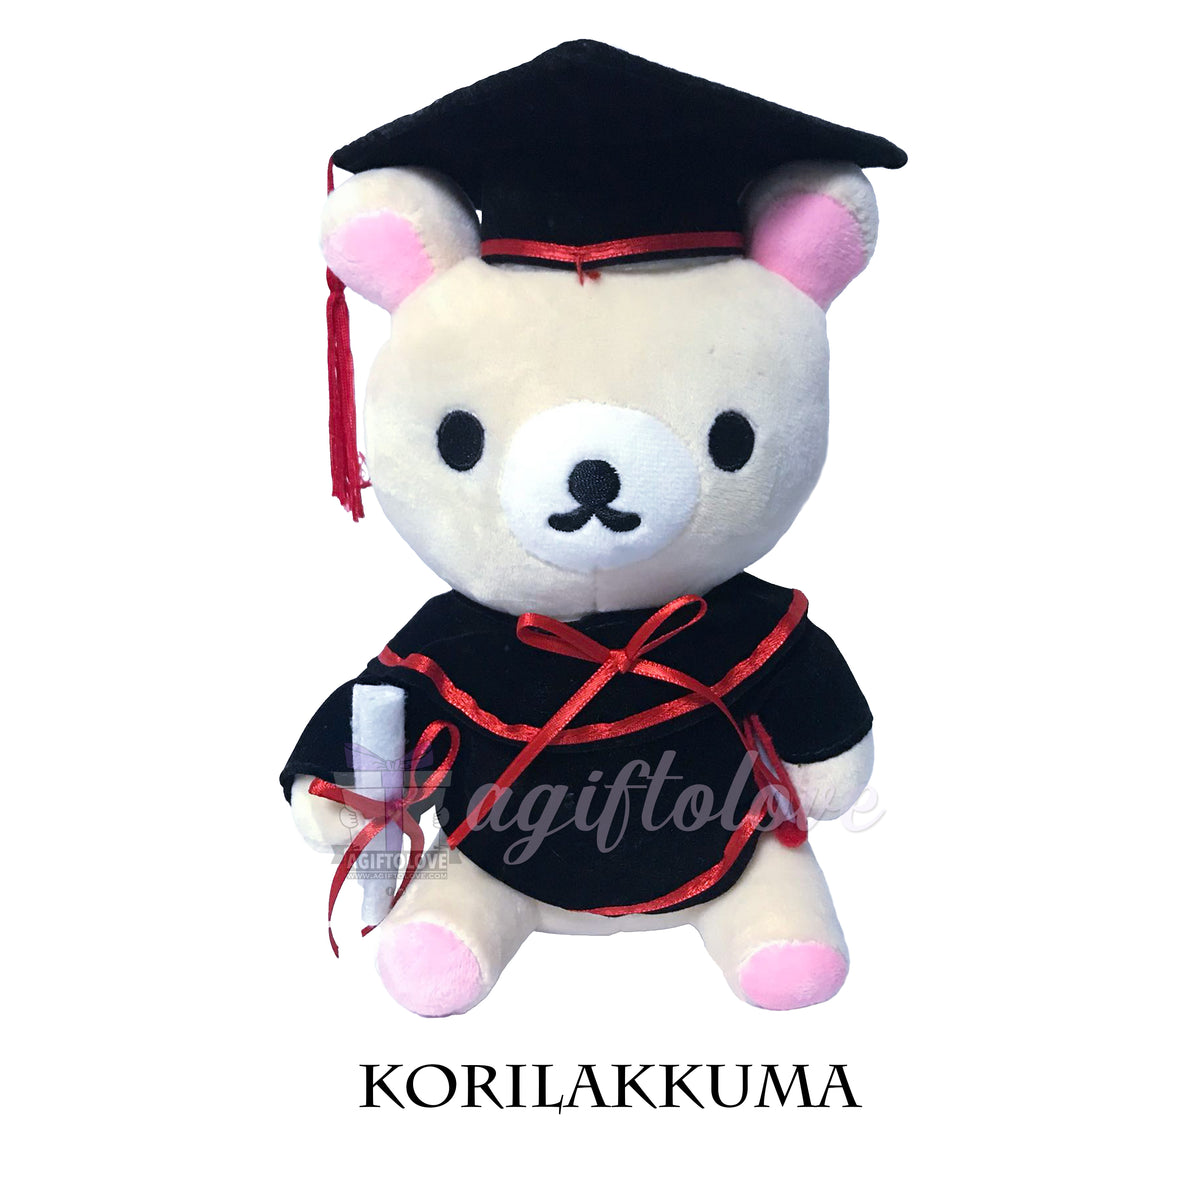 Sanrio - Korilakkuma Graduation Plush - Rilakkuma & Friends